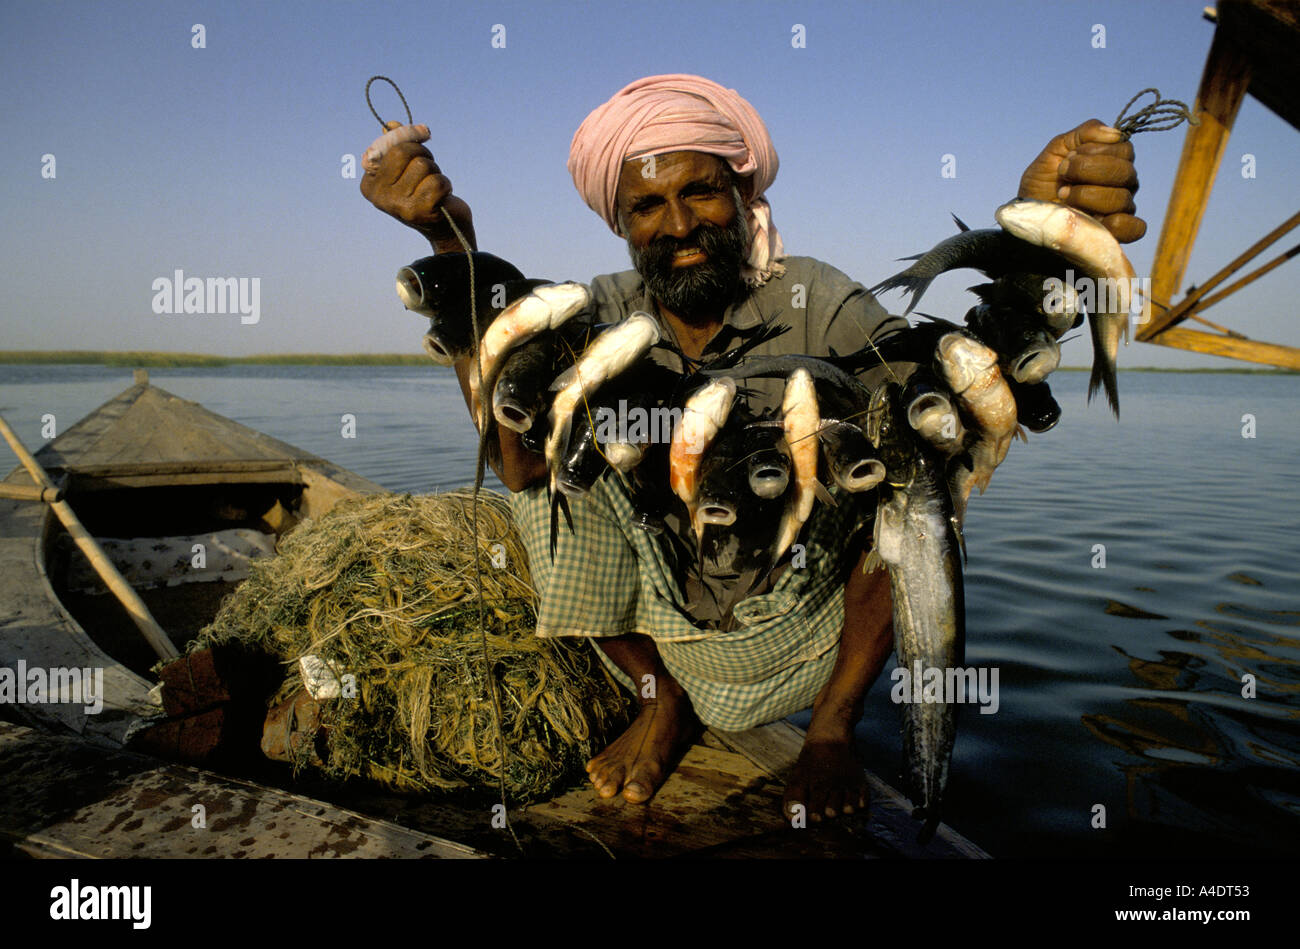 fisherman with catch lake manchar sind province pakistan april 1989 Stock Photo